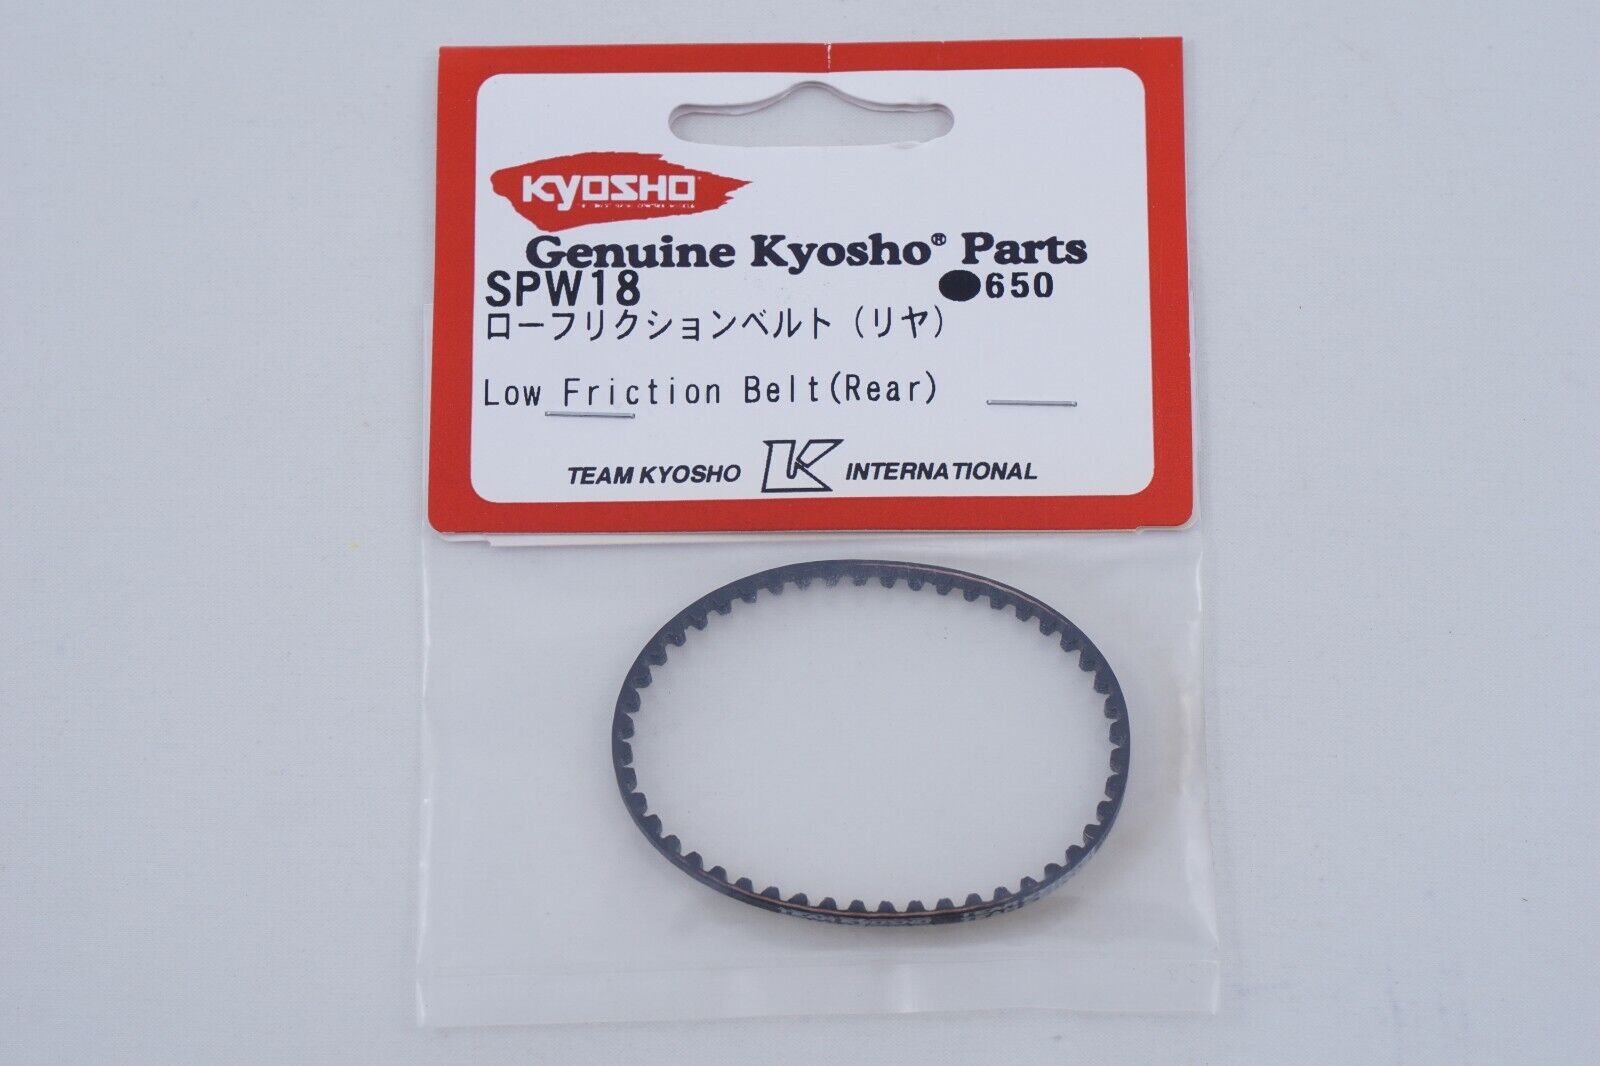 Kyosho SPW18 Low Friction Belt Rear modellismo